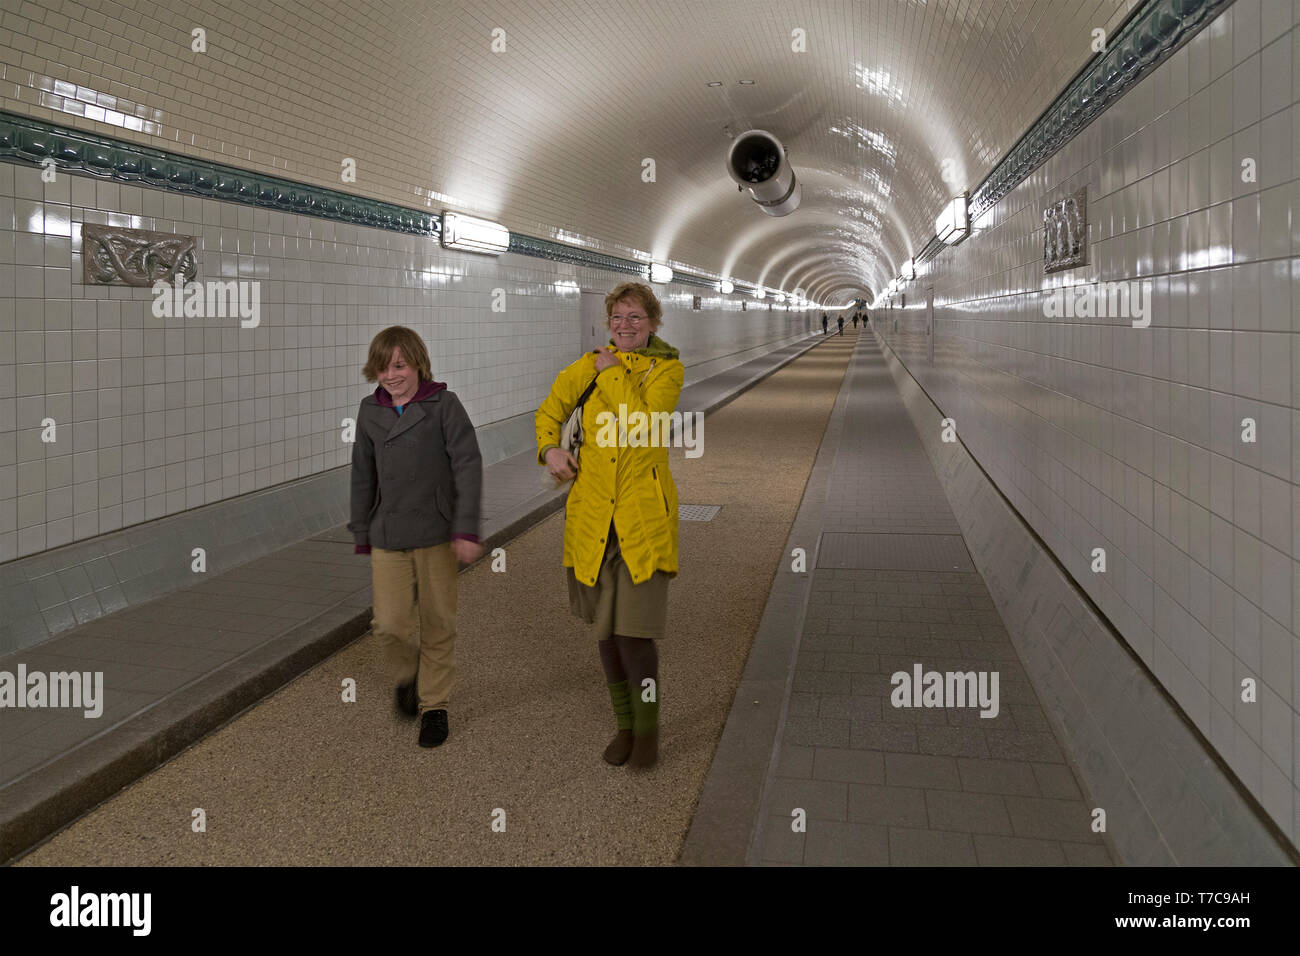 newly refurbished tunnel, Old Elbe Tunnel, Hamburg, Germany Stock Photo